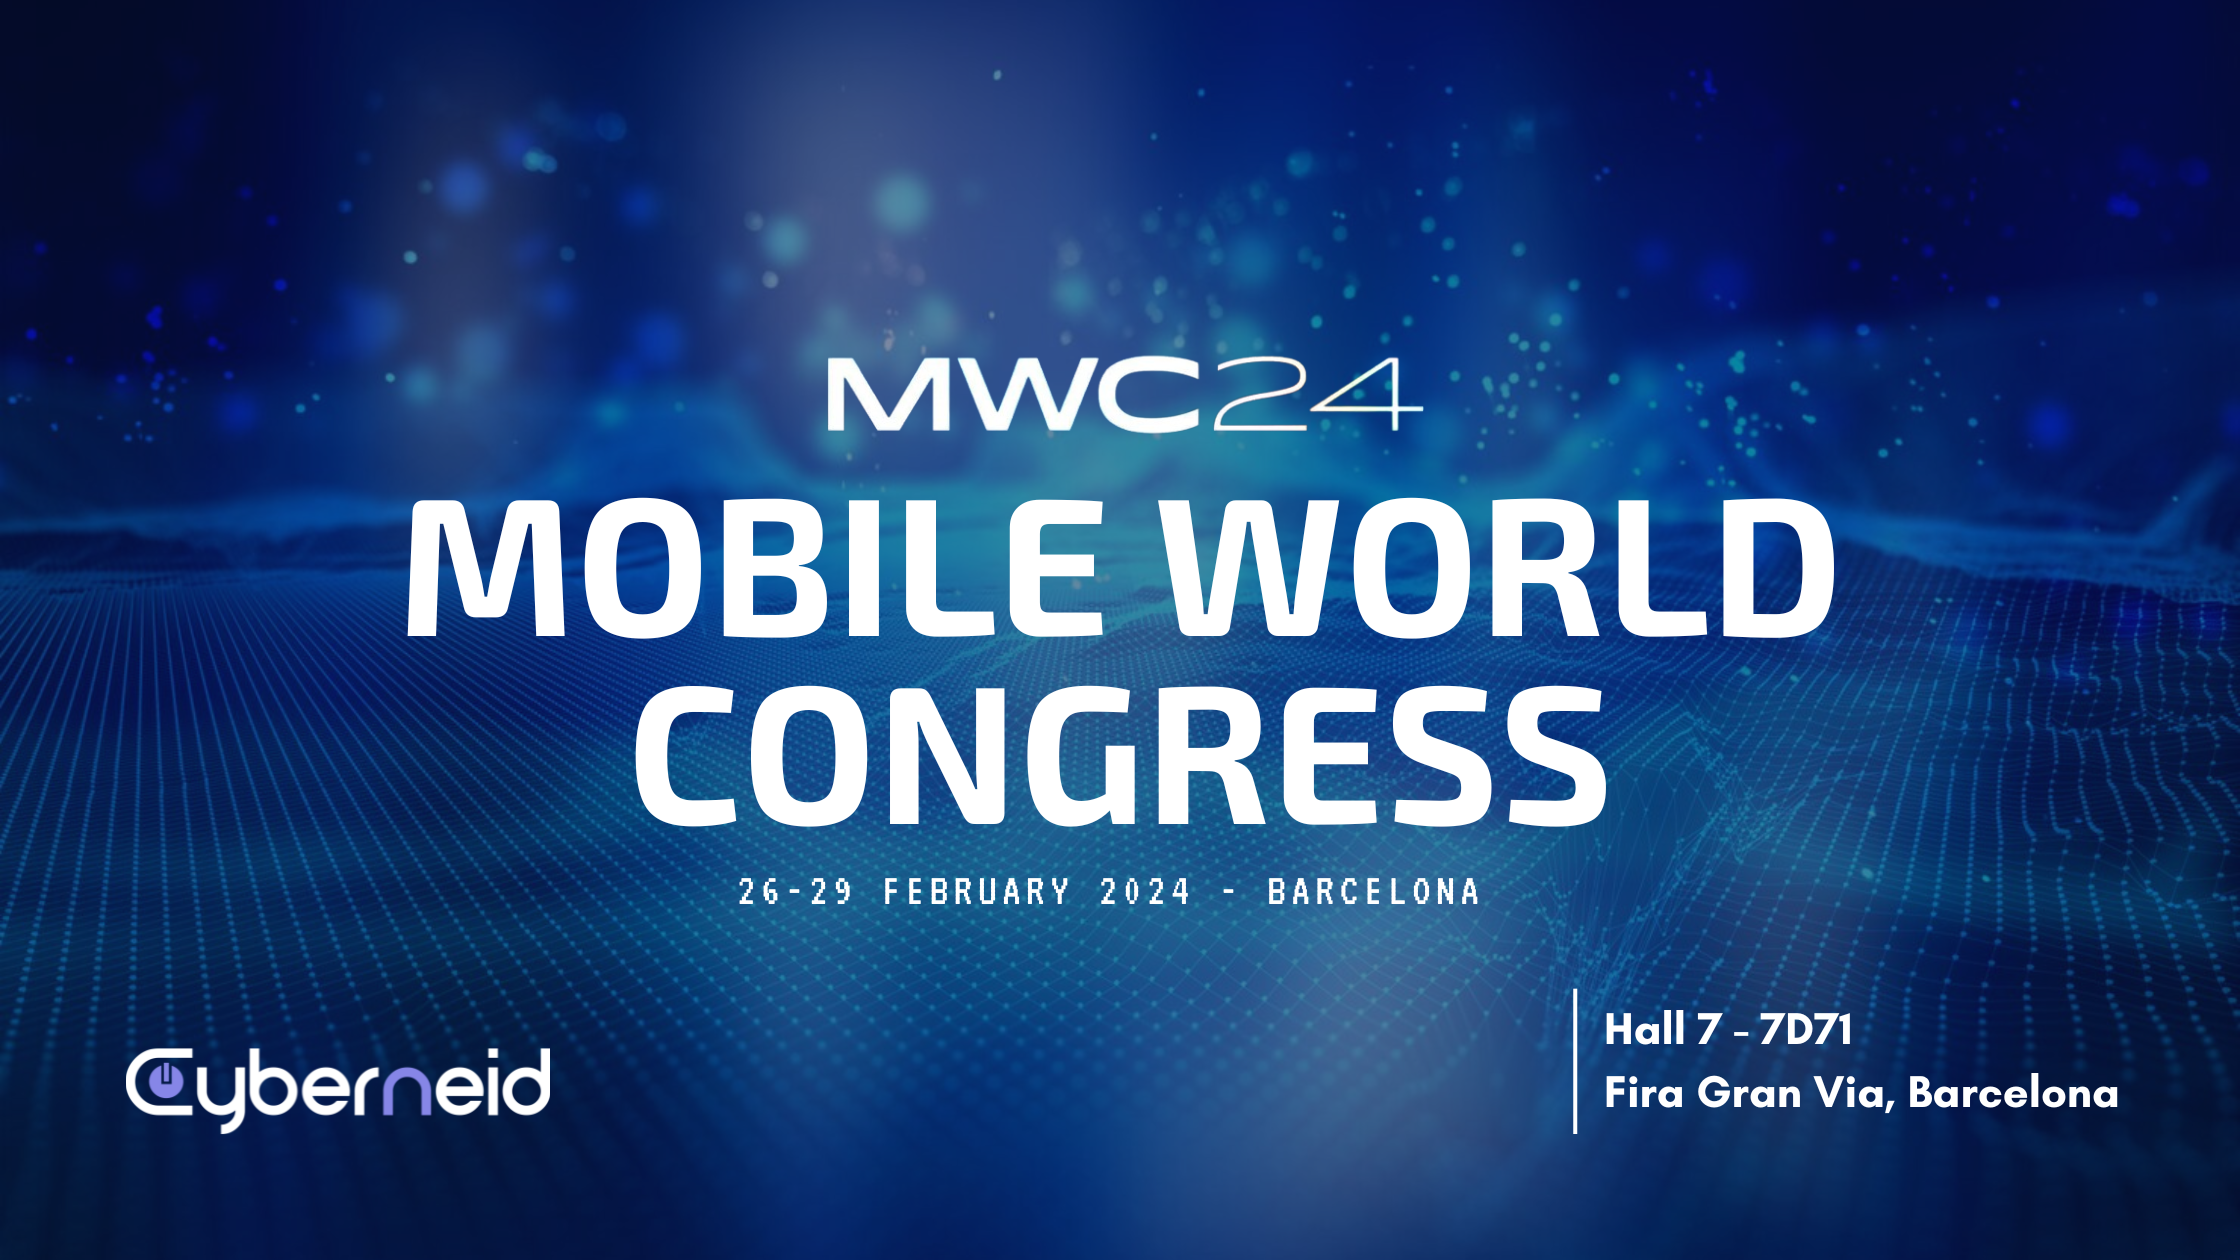 Mobile World Congress: Barcelona 2024